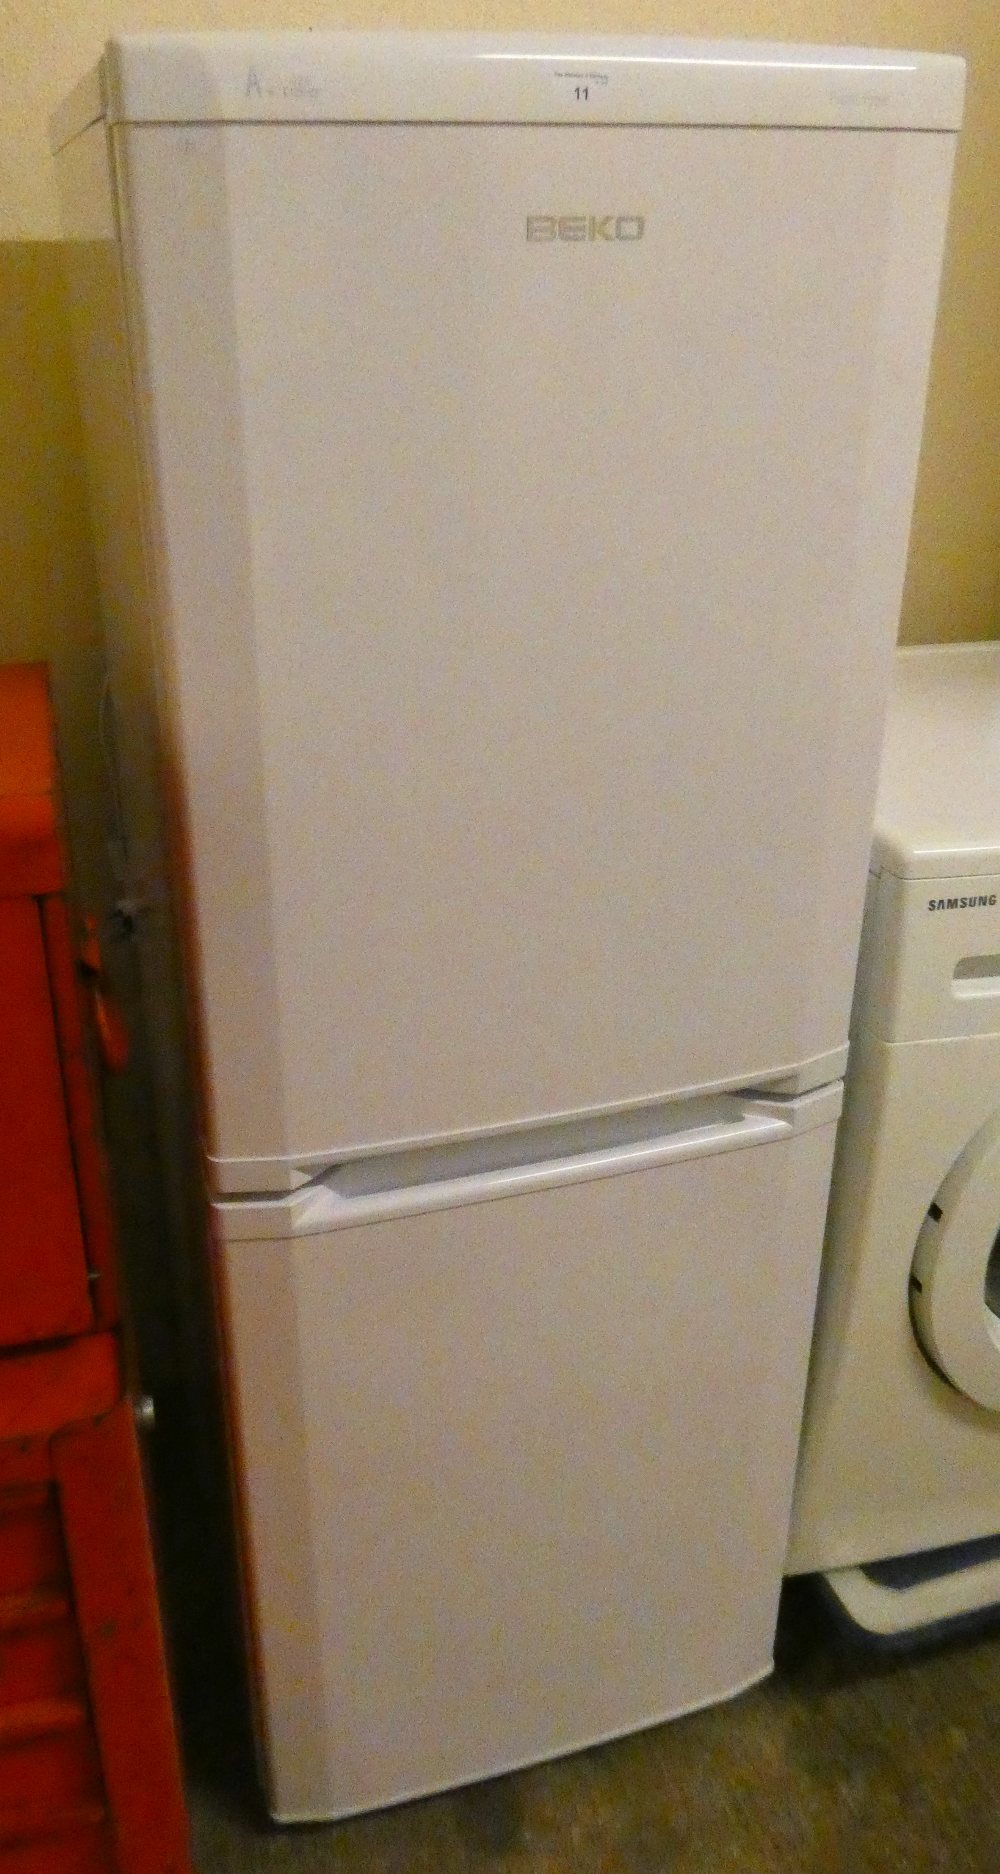 A Beko fridge/freezer CF5533A A+ rated